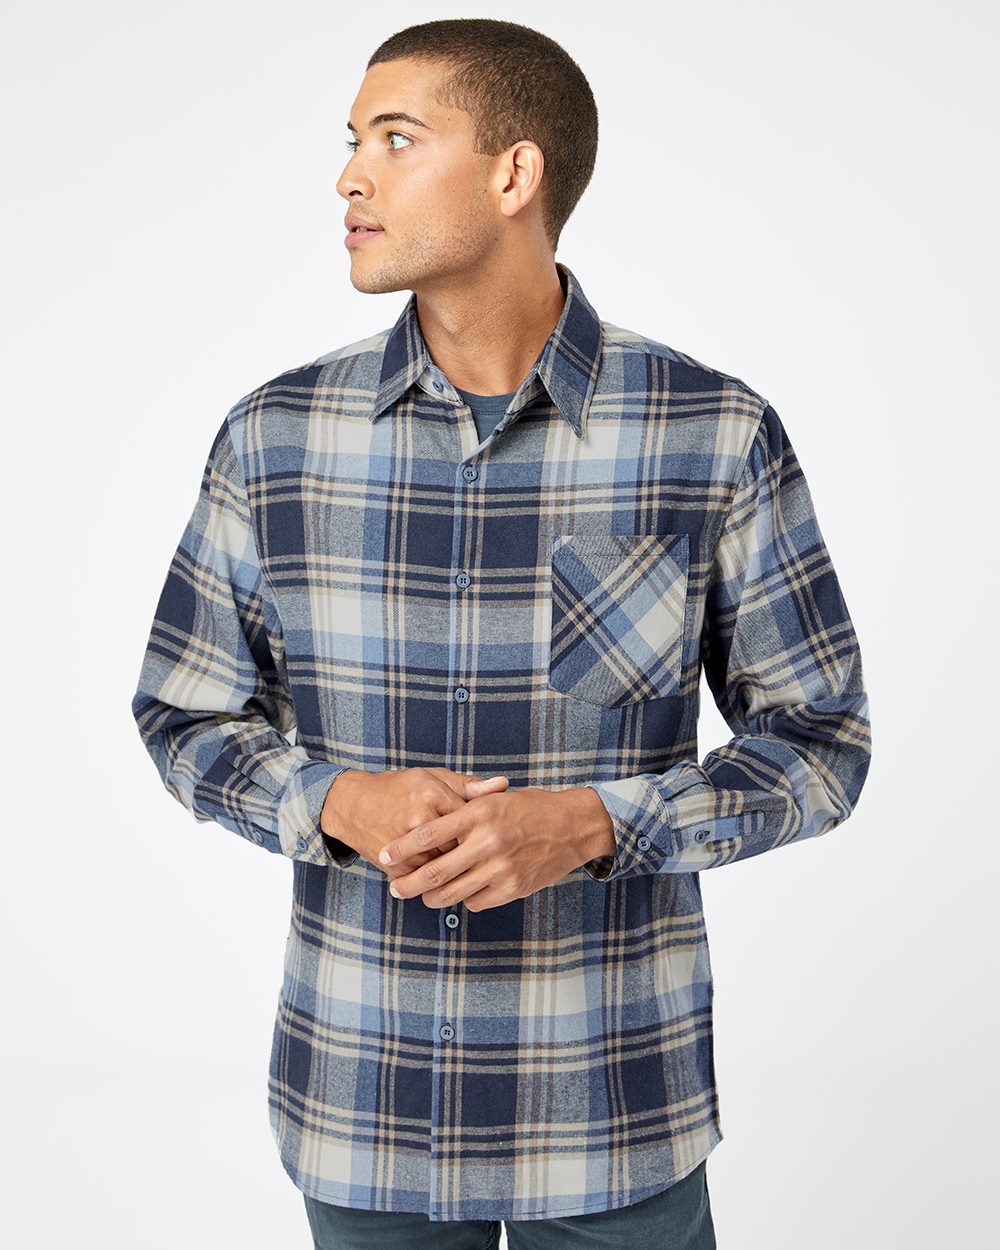 Burnside 8212 - Open Pocket Long Sleeve Flannel Shirt